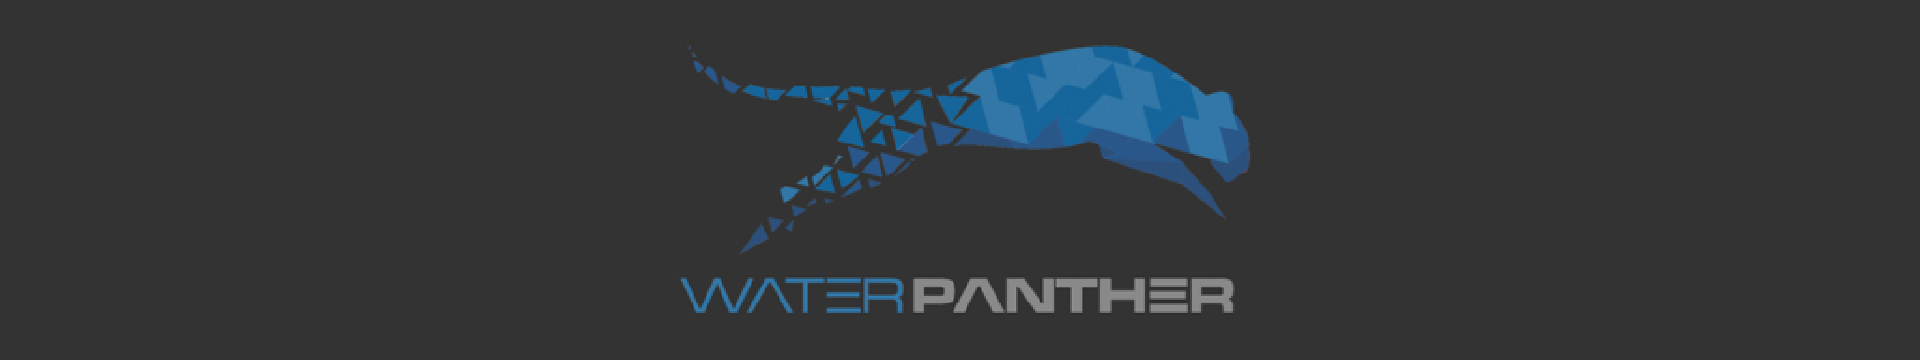 Water Panther